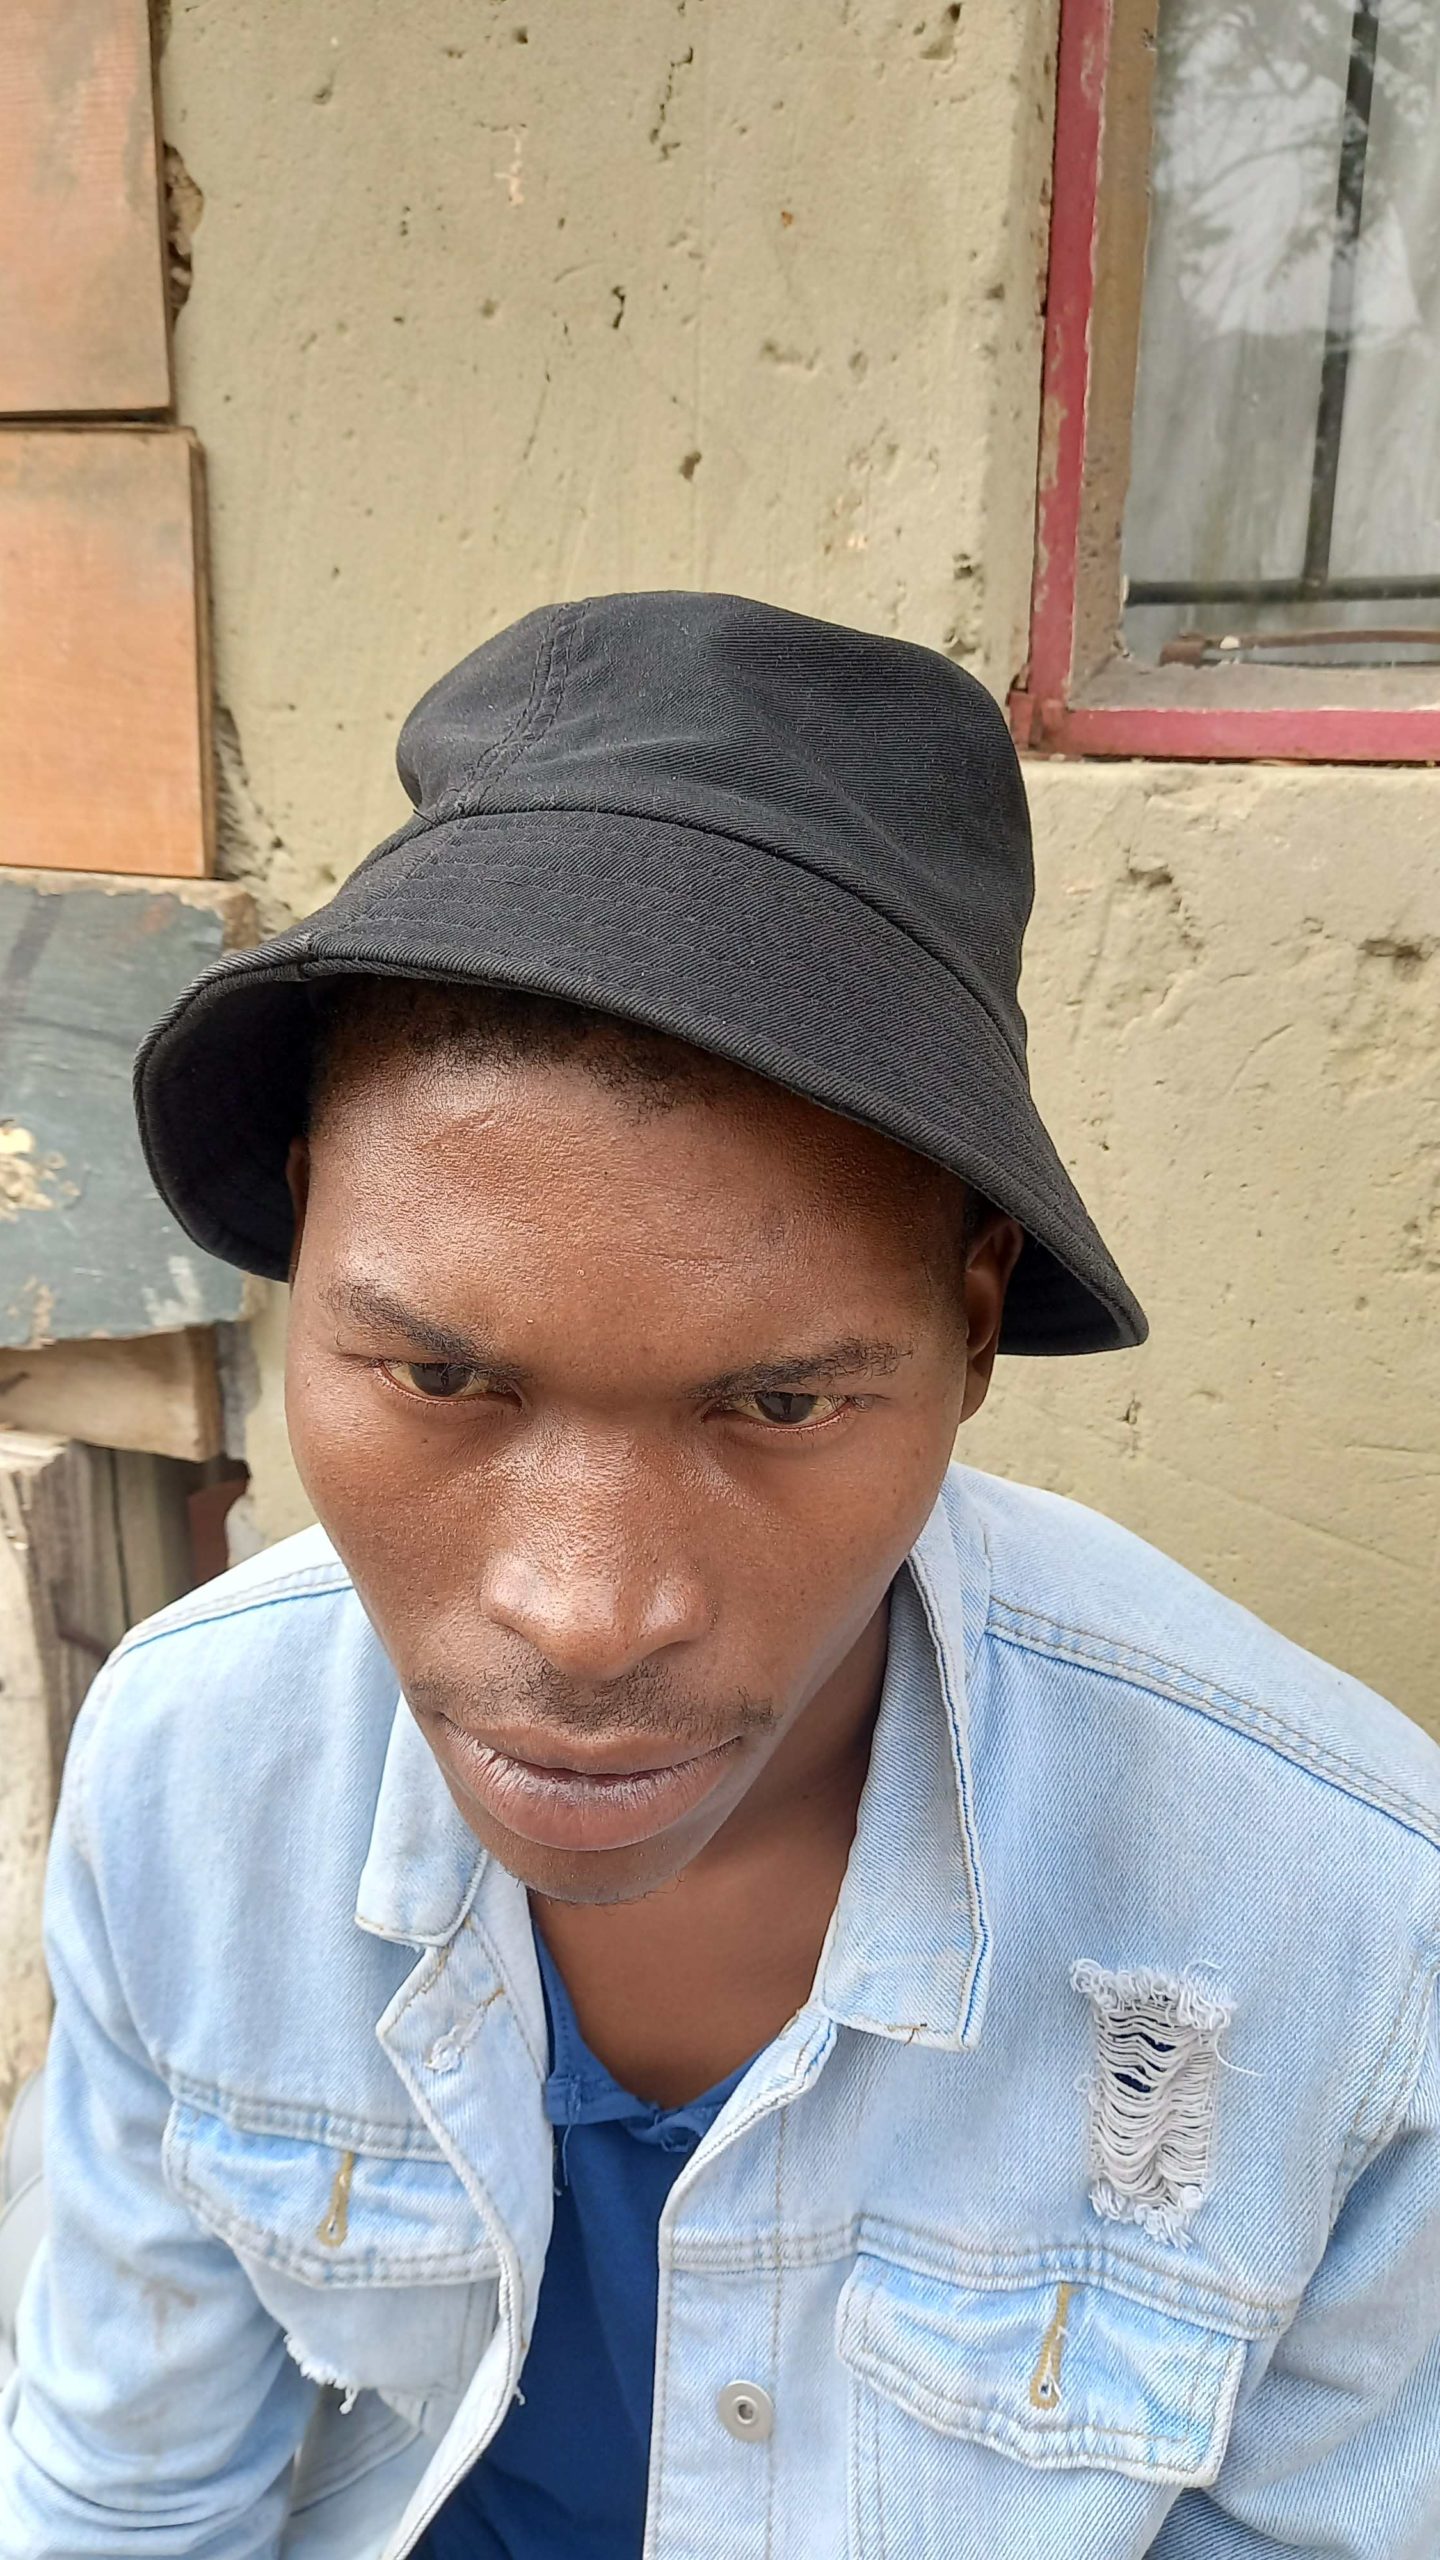 Ngobeni, one of the patrollers shot in Setjwetla , says he won’t stop protecting the community